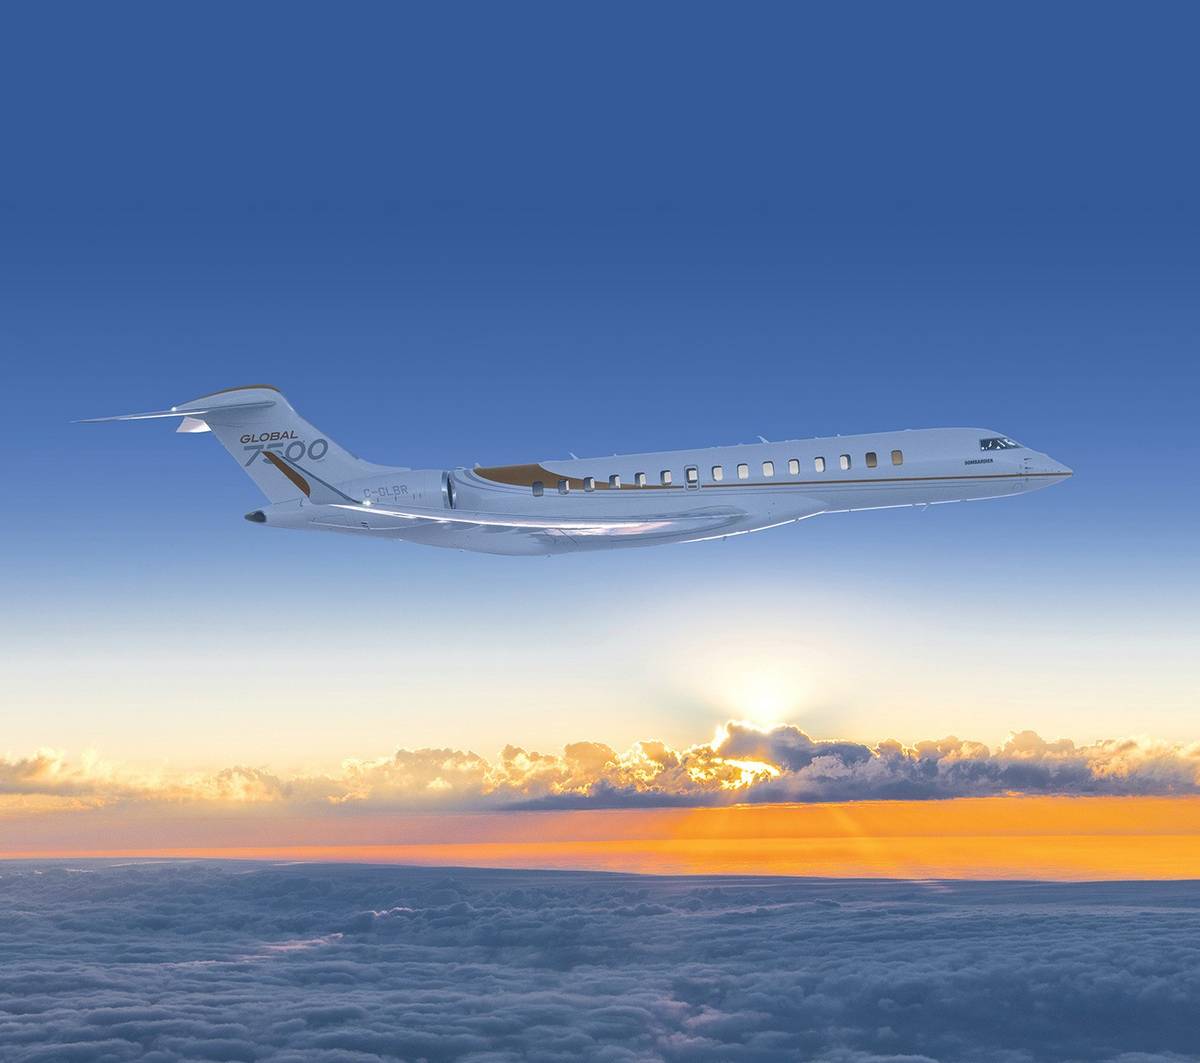 Billionaire Bernard Arnault sells jet to go under Twitter radar